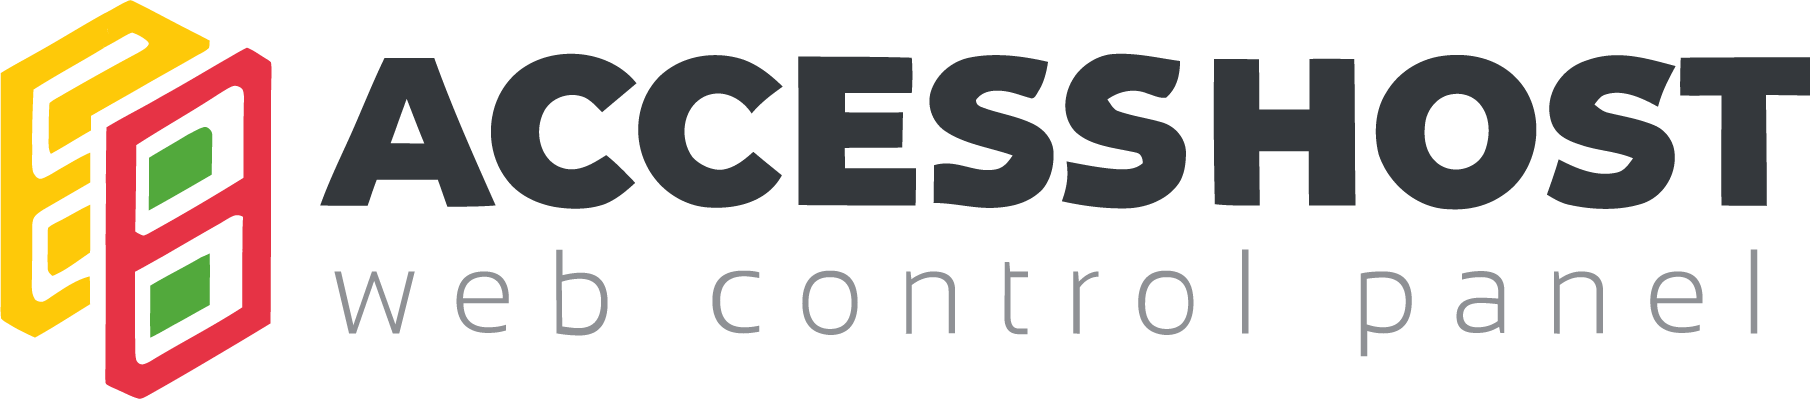 Accesshost Services LLC